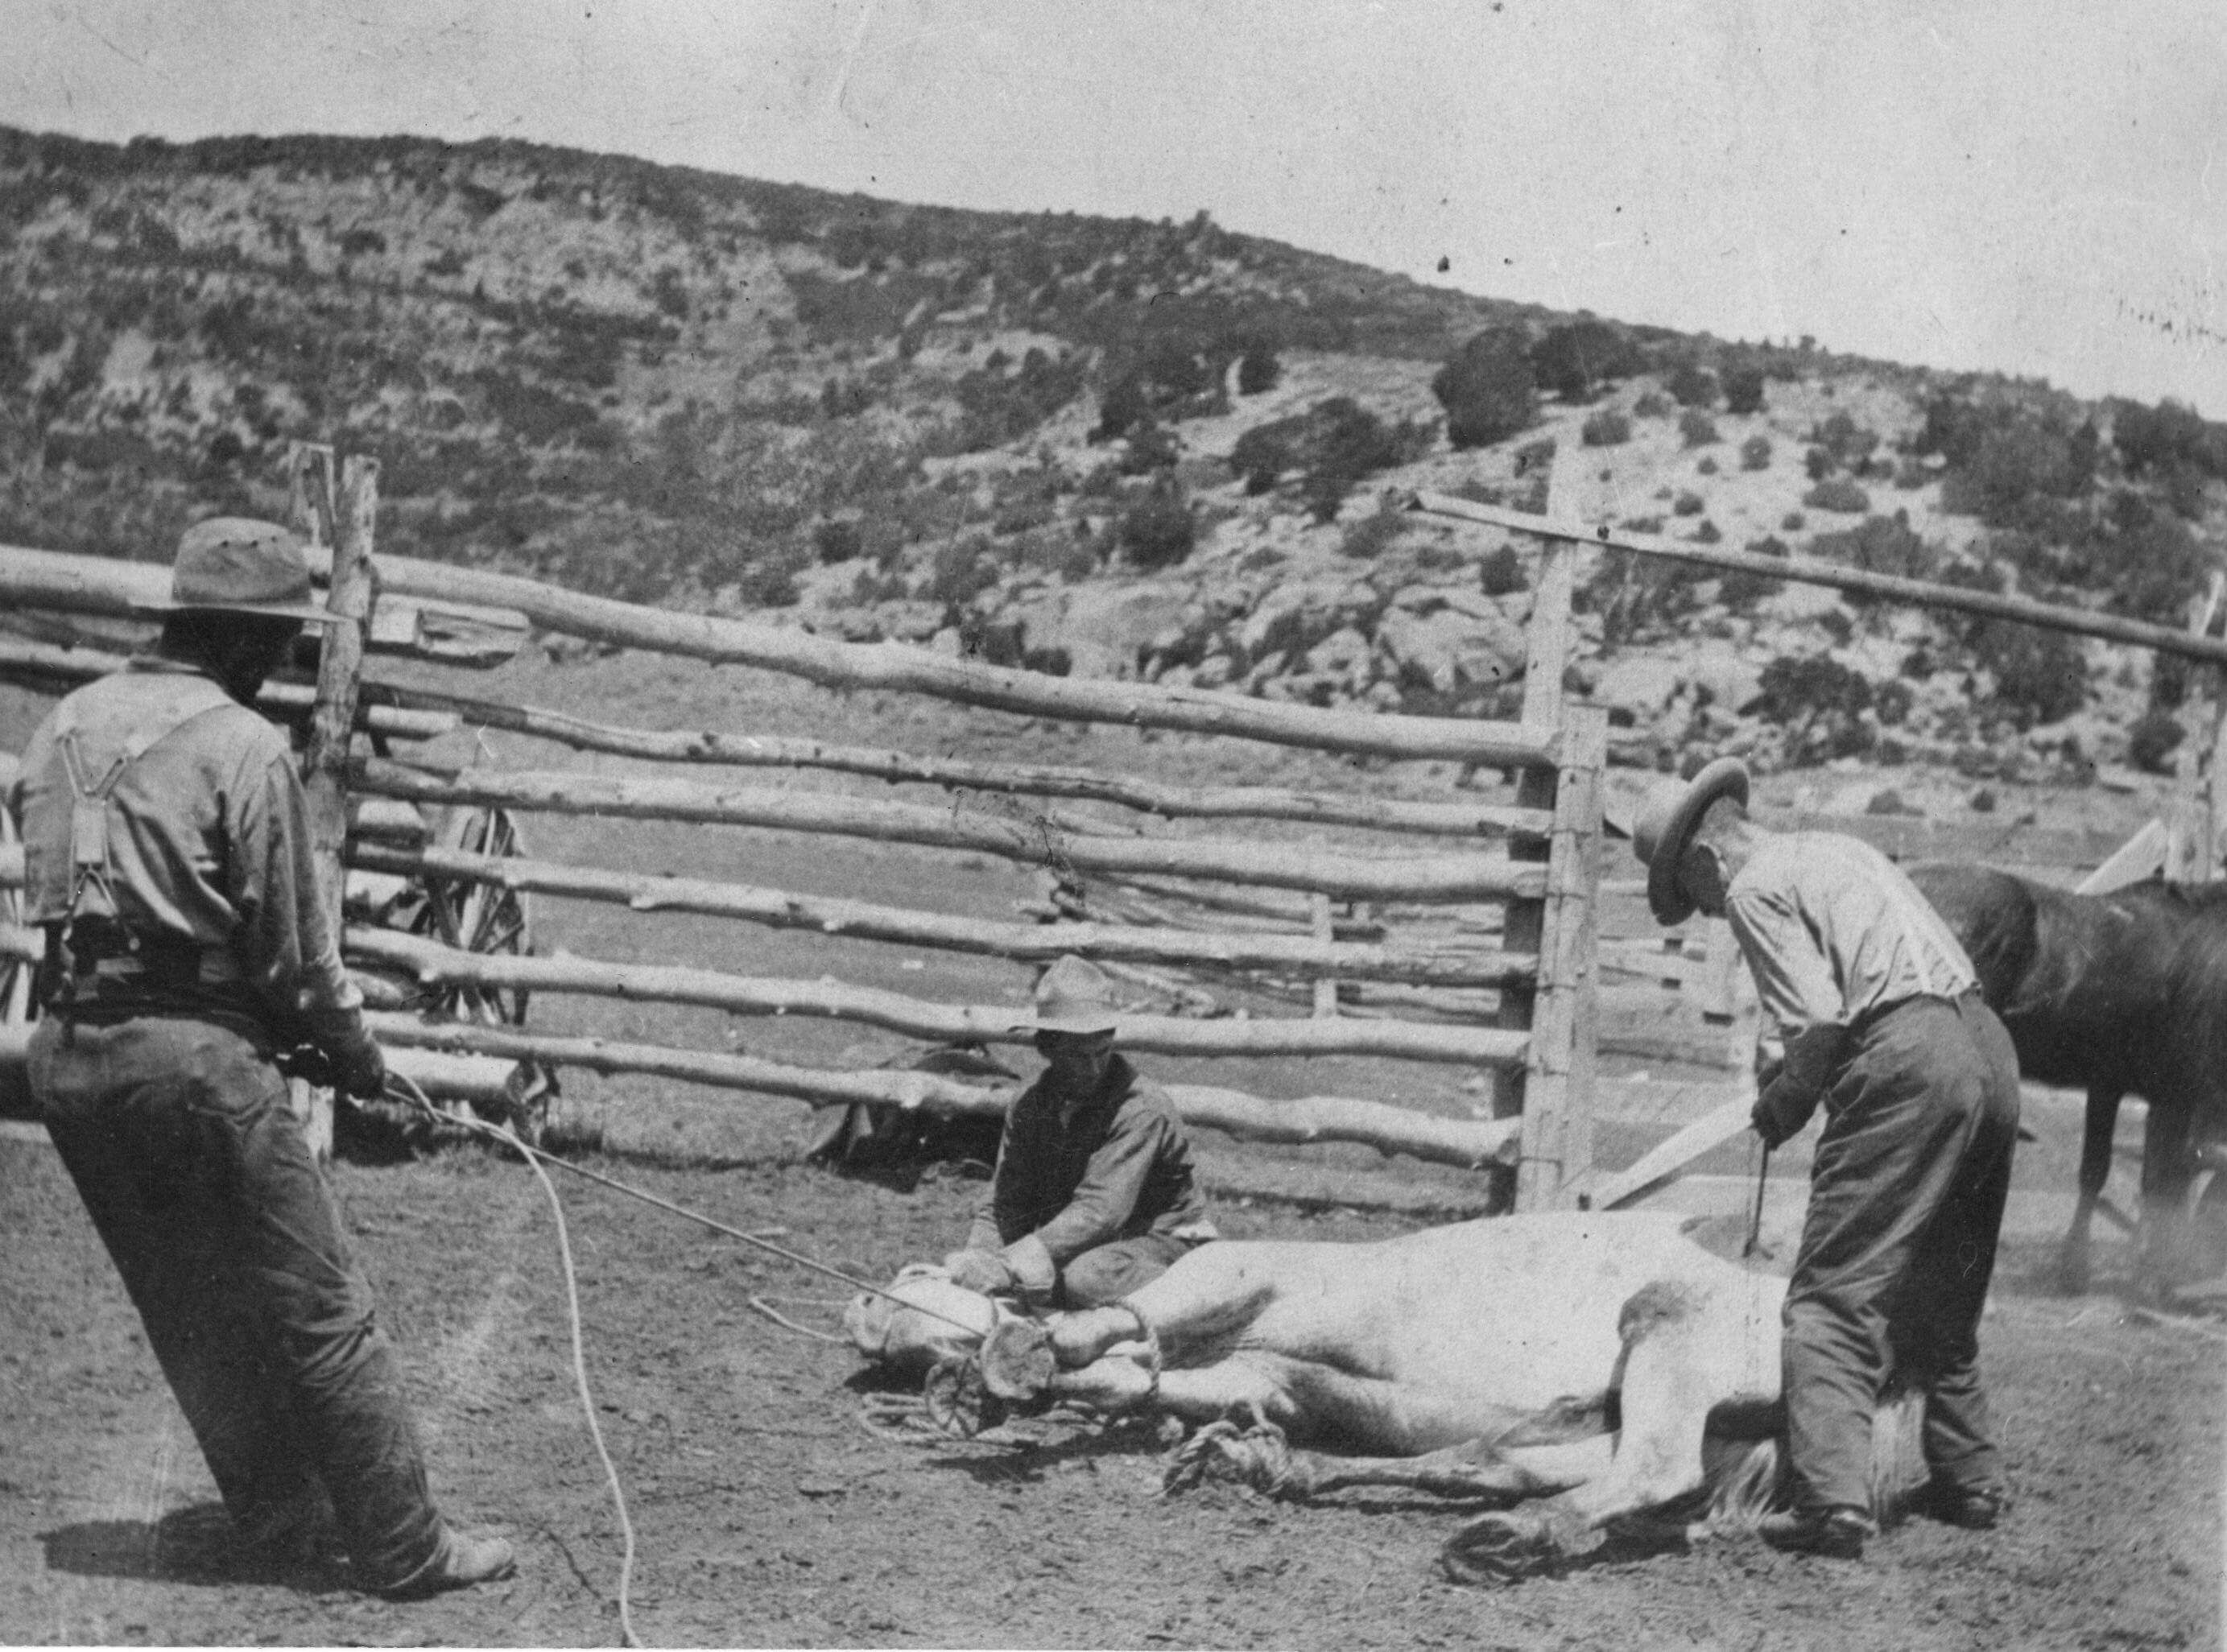 Branding cattle on Douglas Creek Cross Ranch in 1896. Photo # 2004.44.865, Museums of Western Colorado.